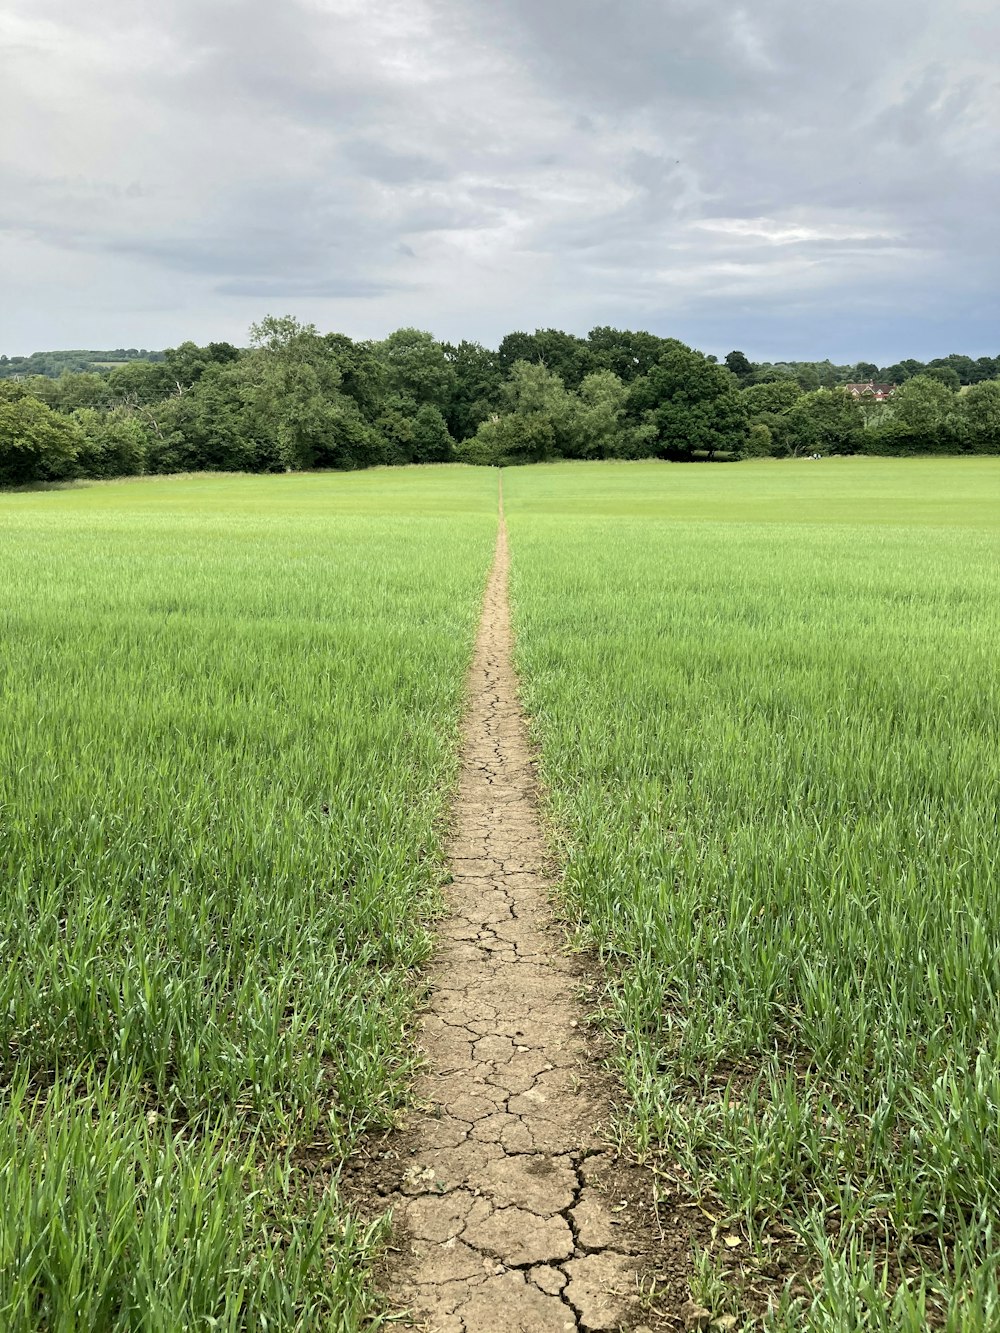 brown dirt pathway between green grass field during daytime